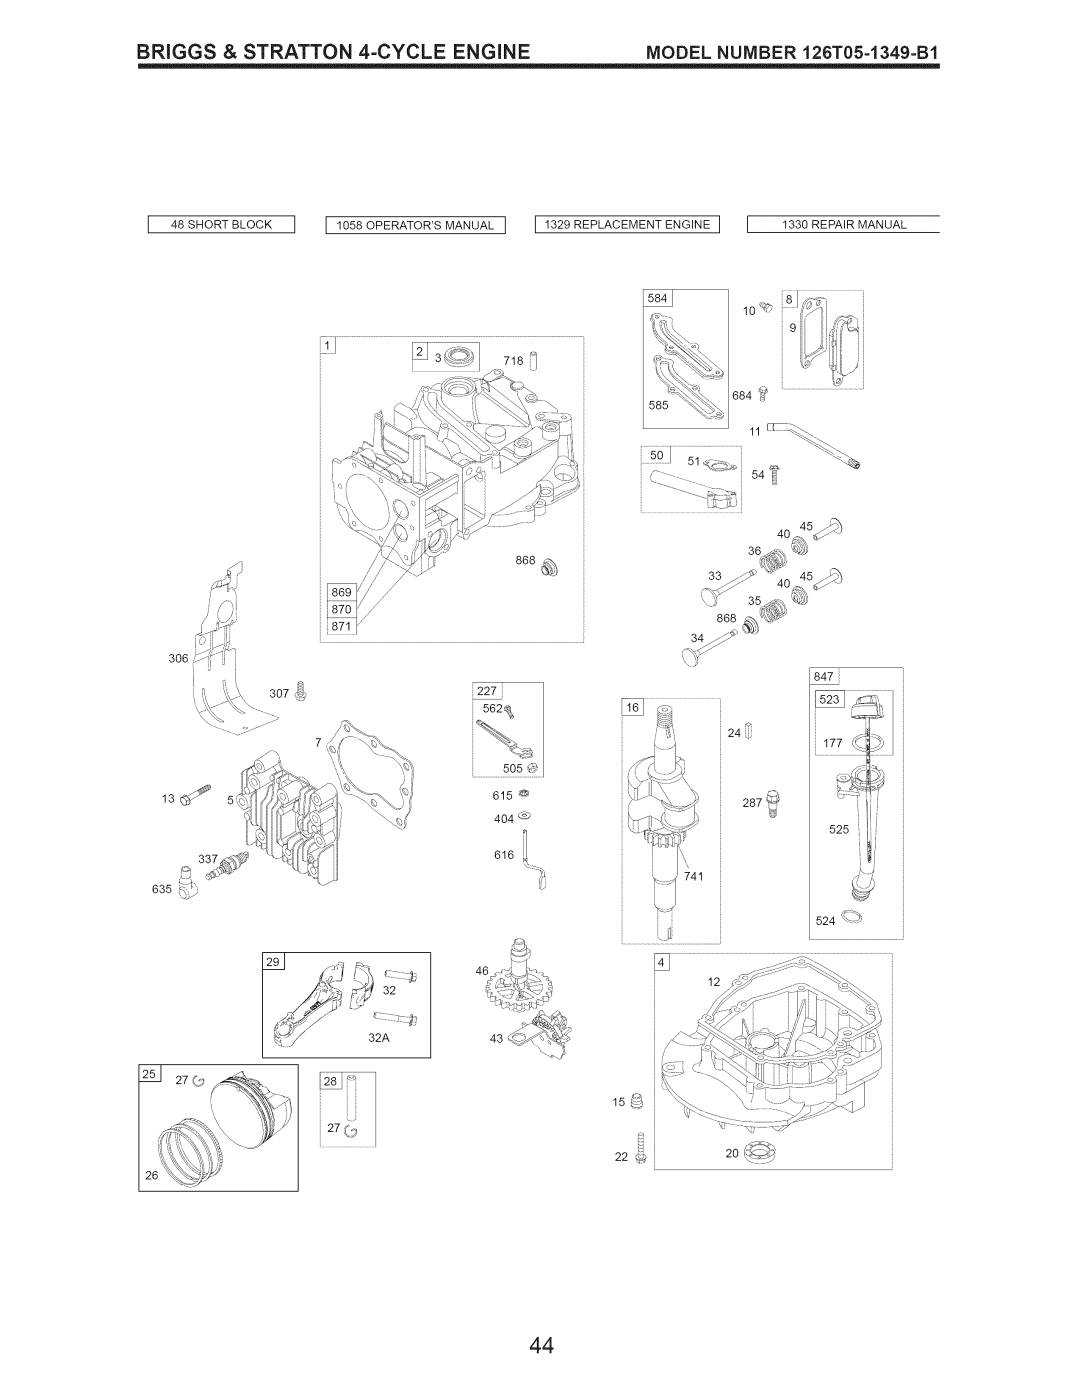 Craftsman 917.376536 manual BRIGGS & STRATTON 4-CYCLEENGINE, MODEL NUMBER 126T05-1349=B1, 3O6 i 24 505 @ 615, 404 _, 718 _1 